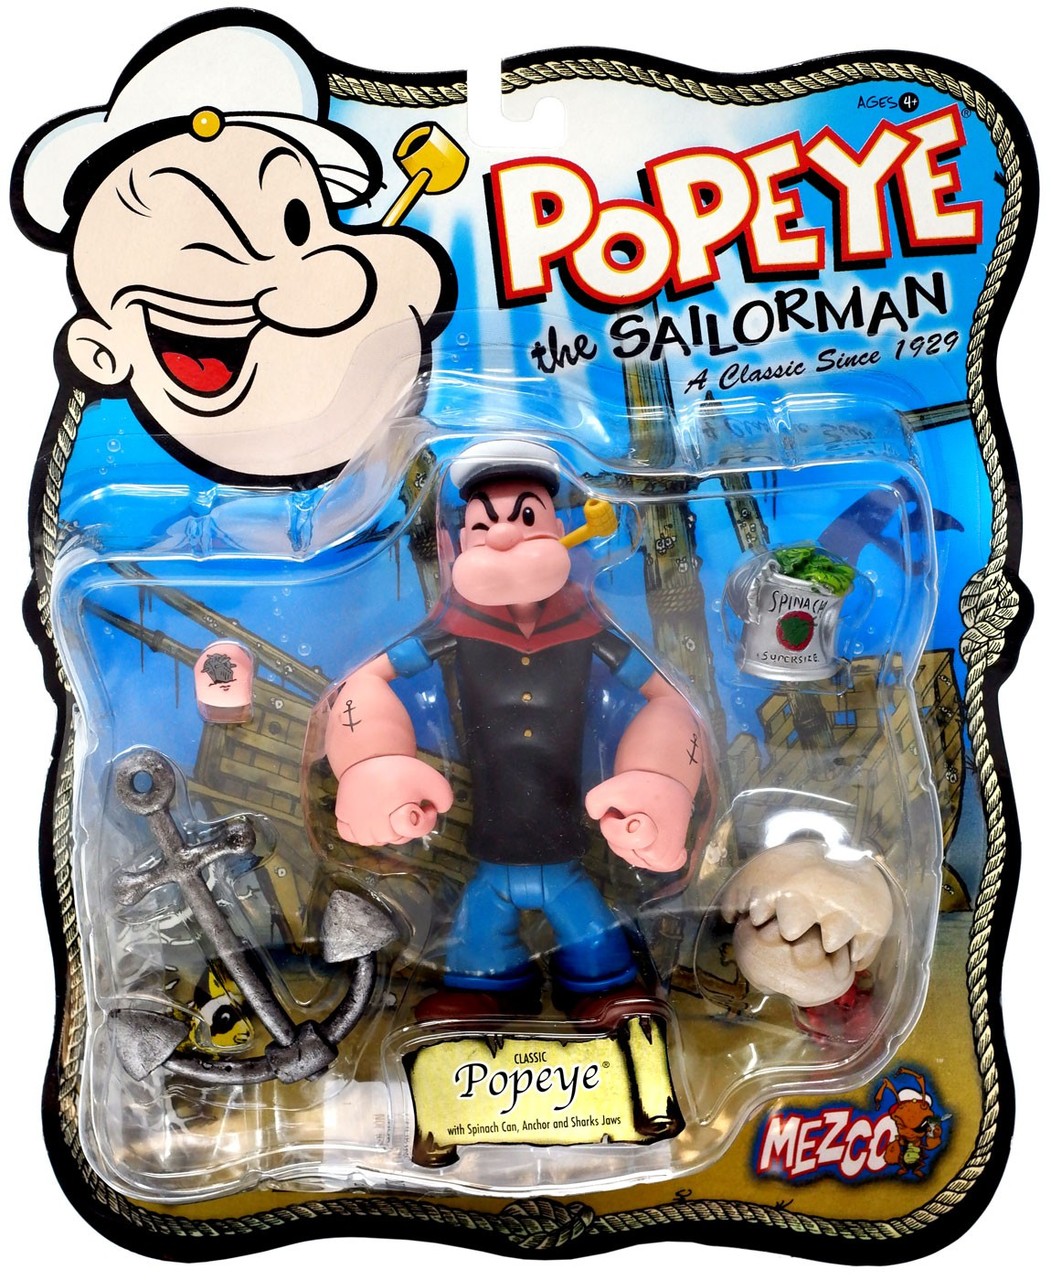 Popeye the sailorman figure 